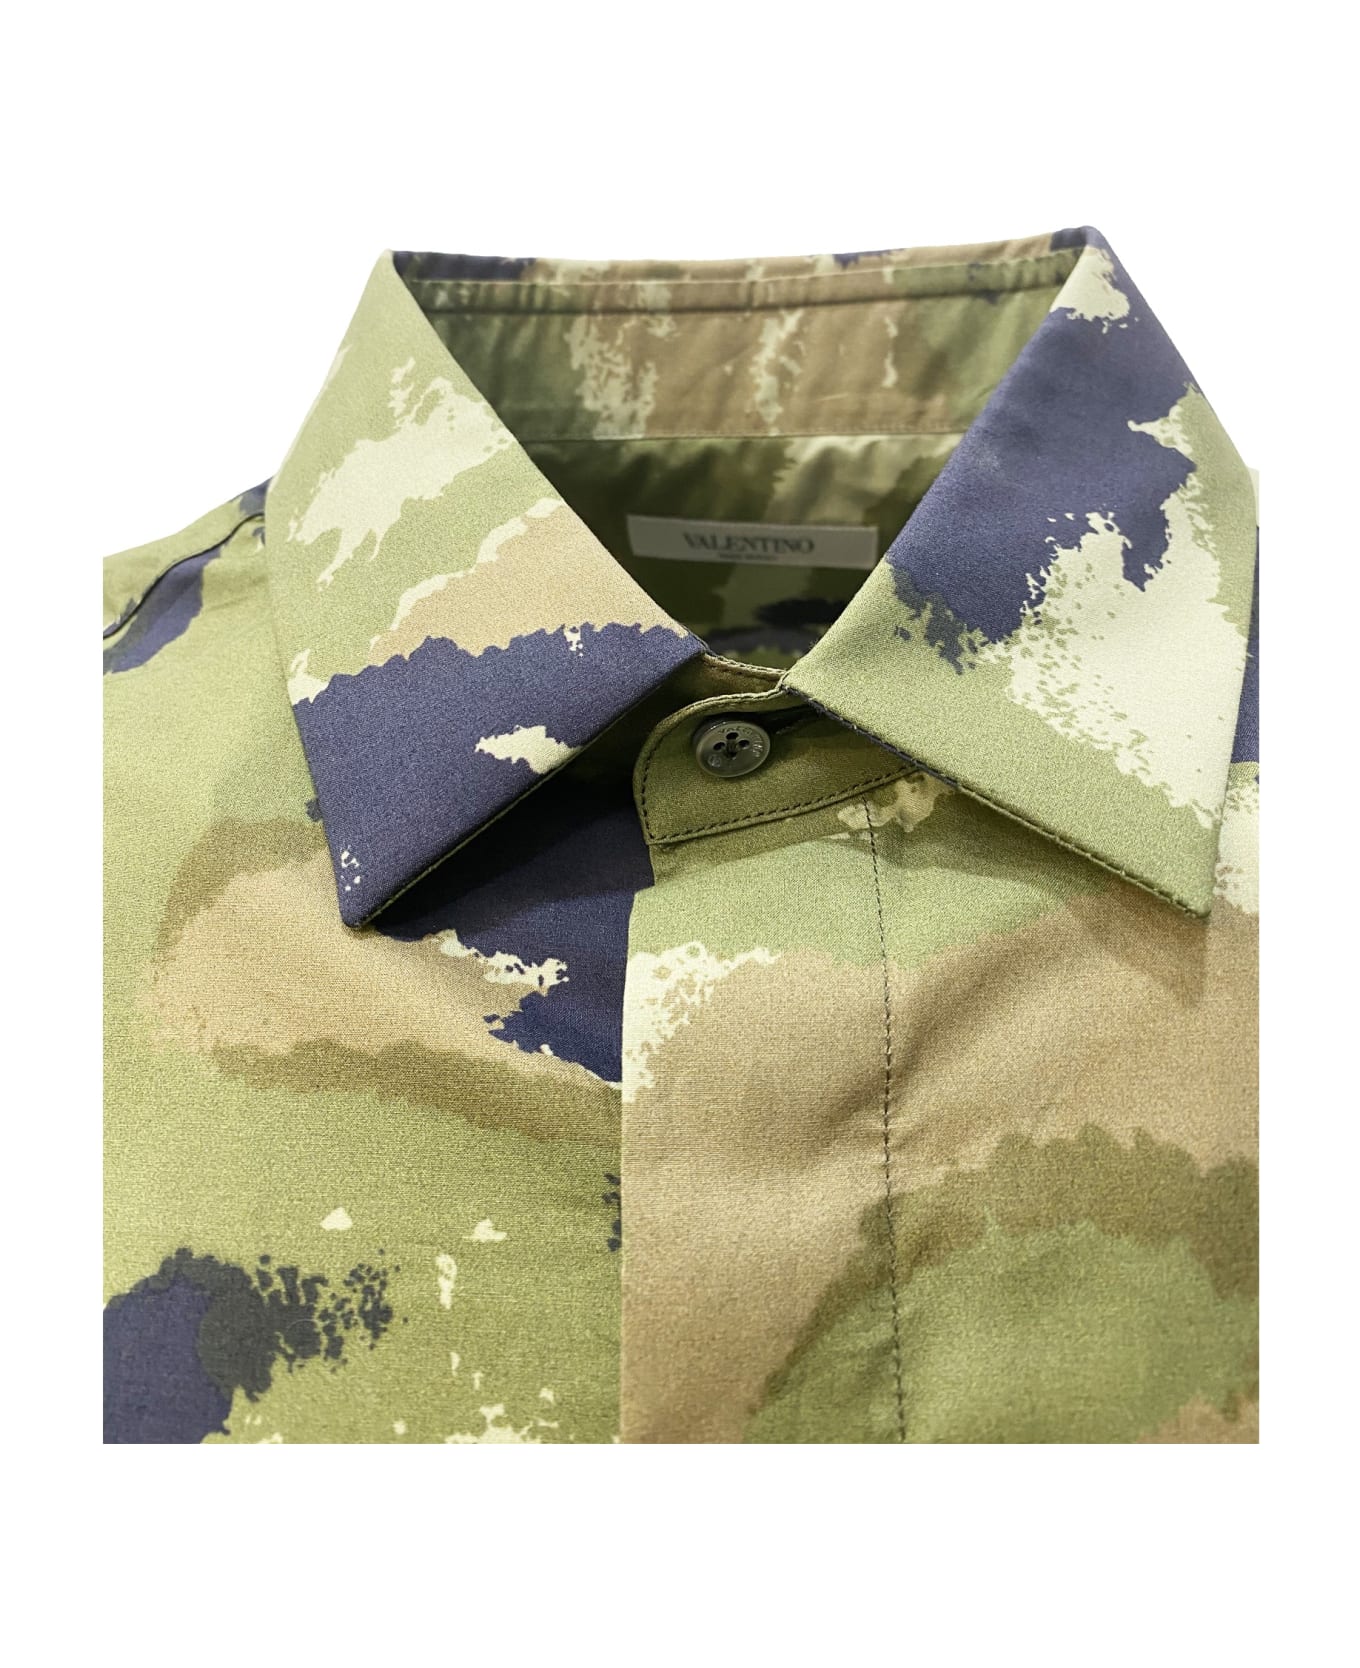 Valentino Camouflage Army Shirt - Green